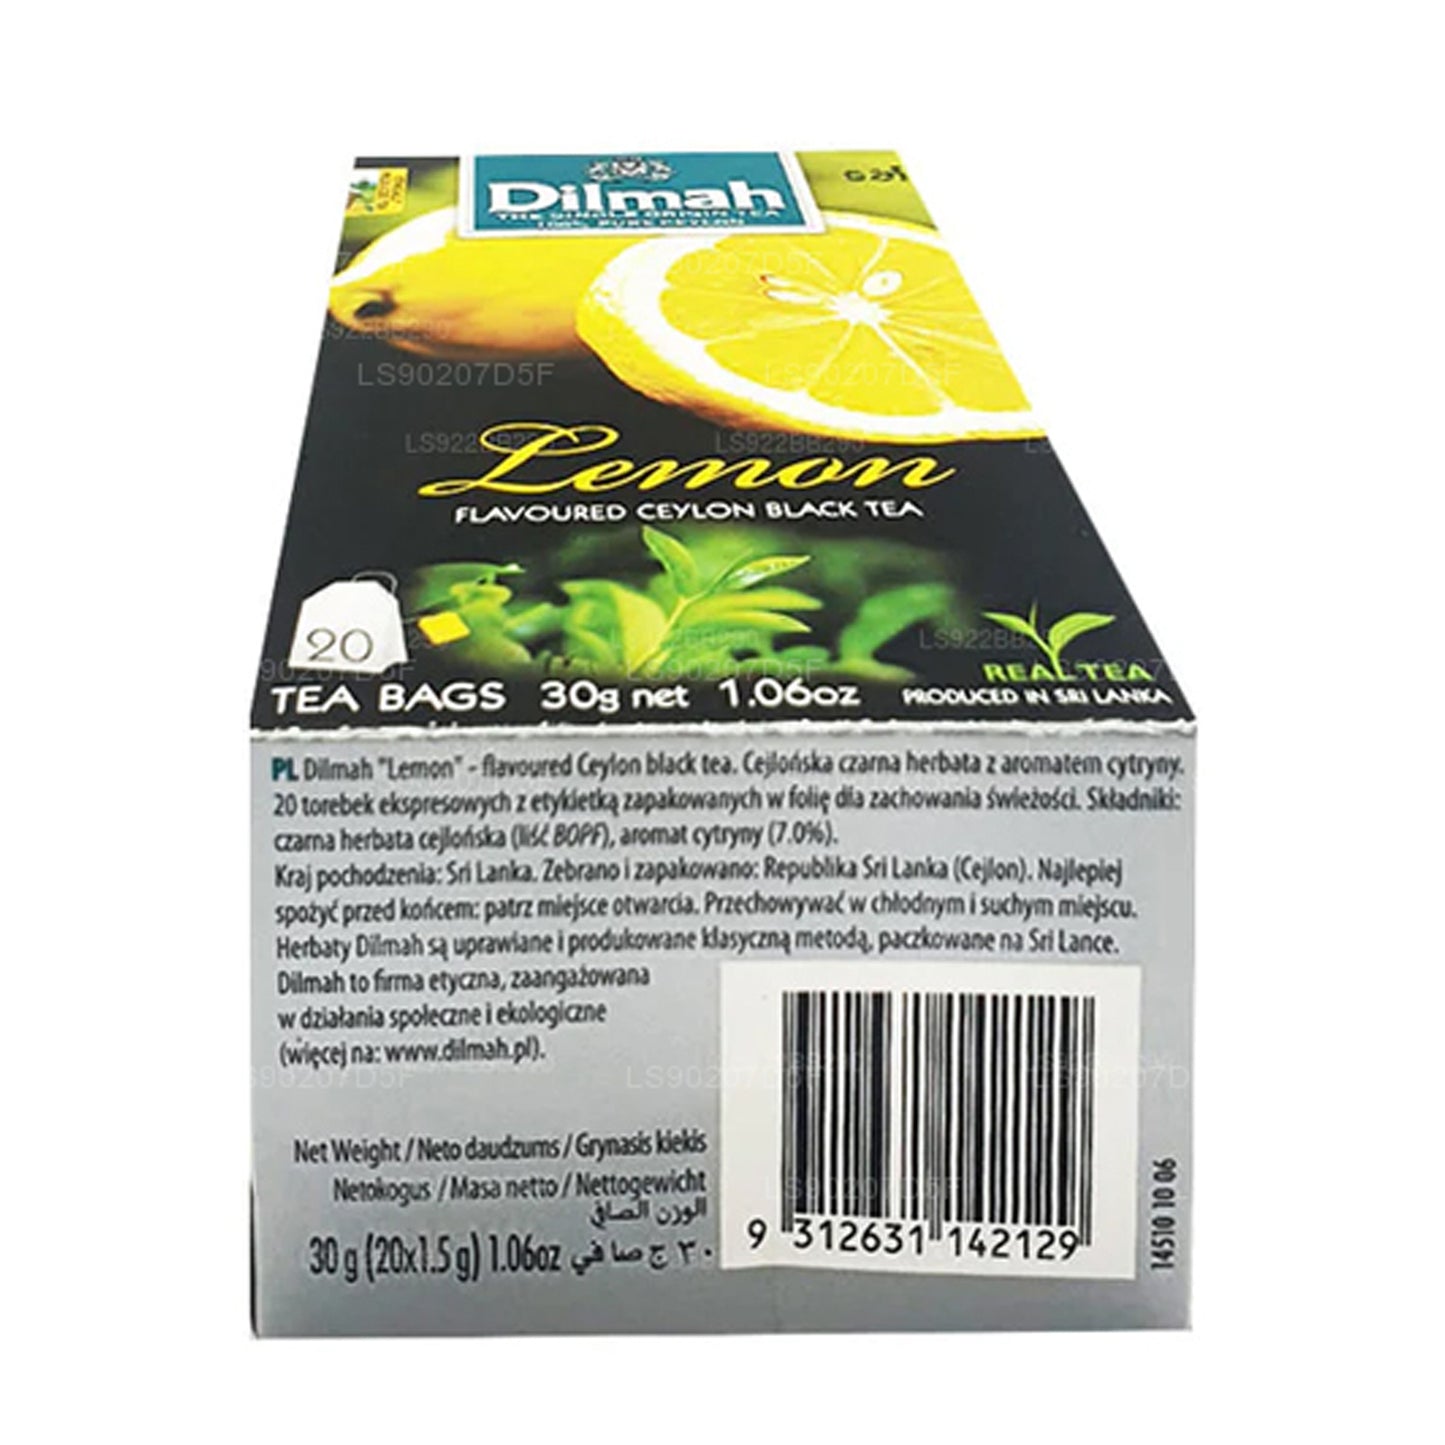 Dilmah Lemon Flavored Tea (30g) 20 Tea Bags